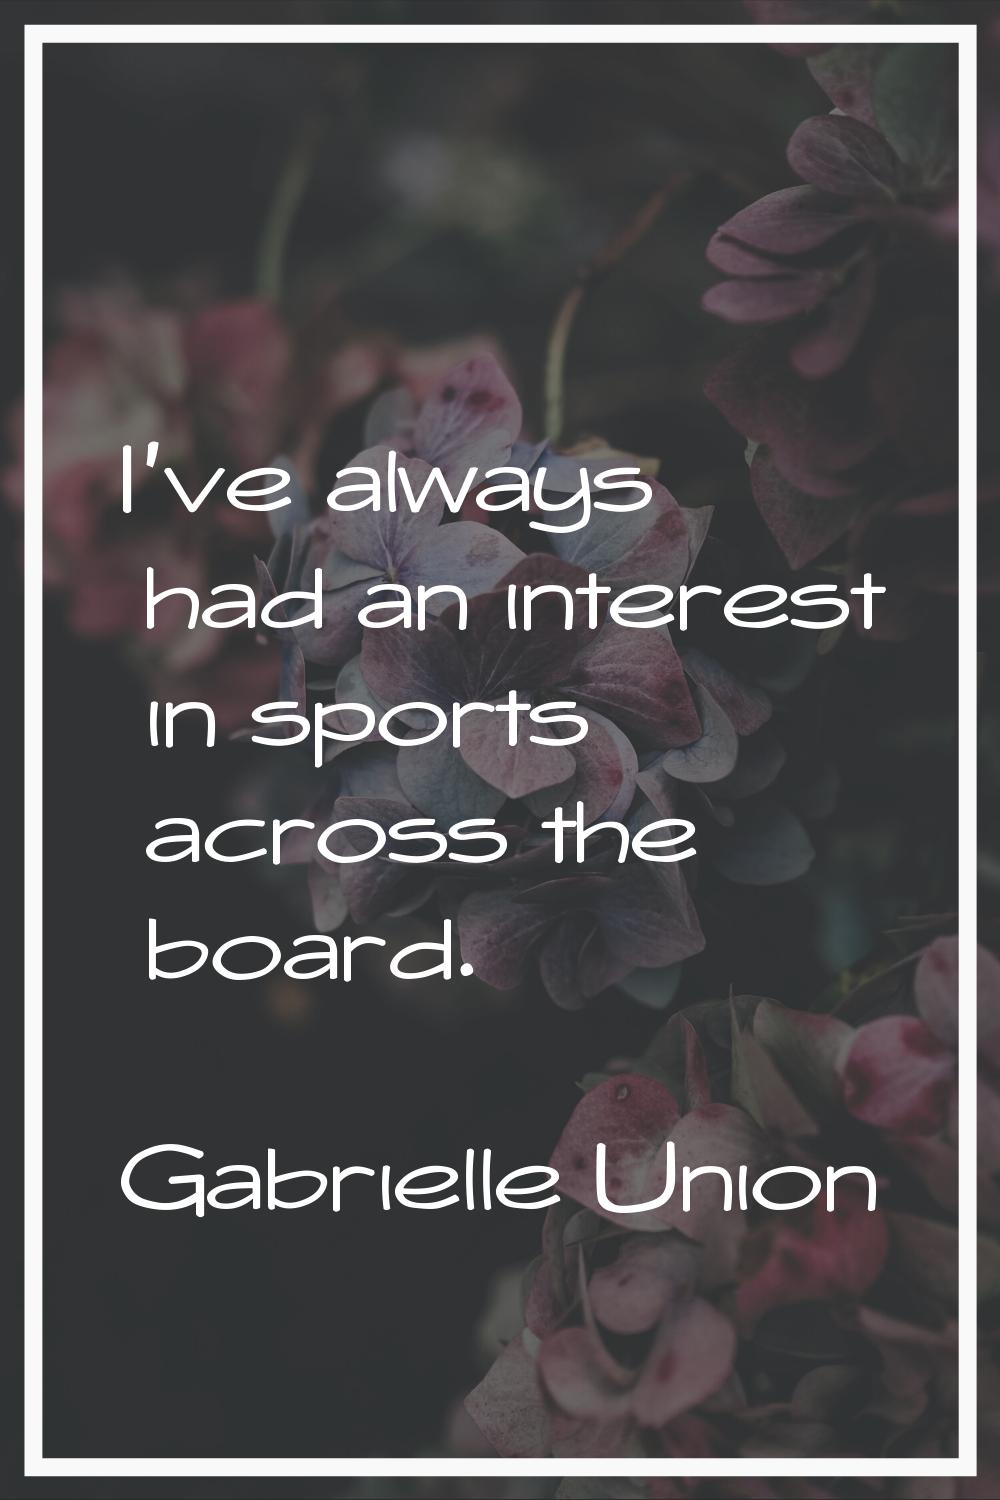 I've always had an interest in sports across the board.